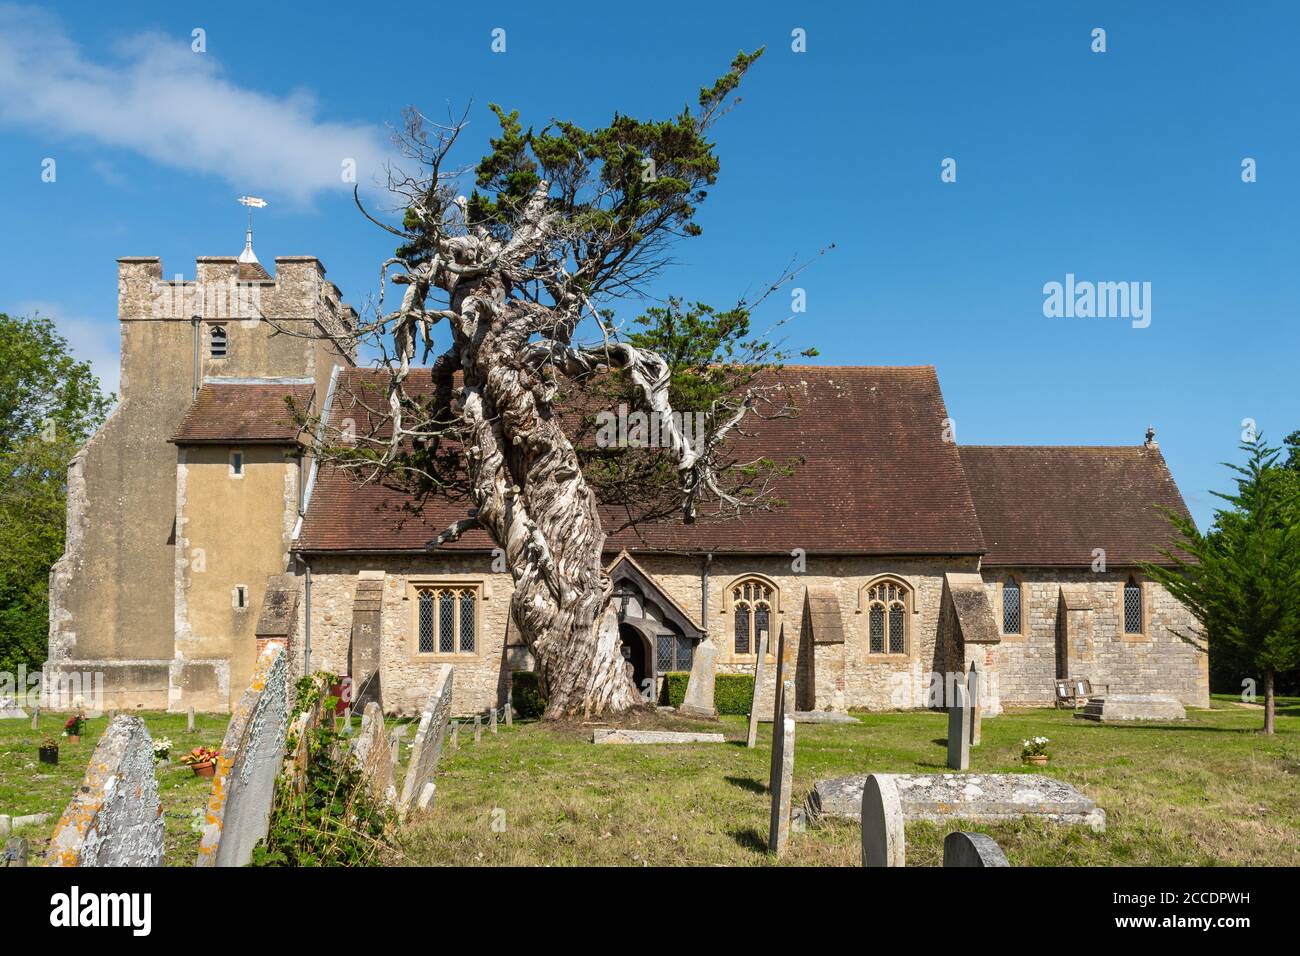 St James village church in Birdham village with the ancient Monterey cypress tree (Cupressus macrocarpa) in the churchyard, West Sussex, UK Stock Photo